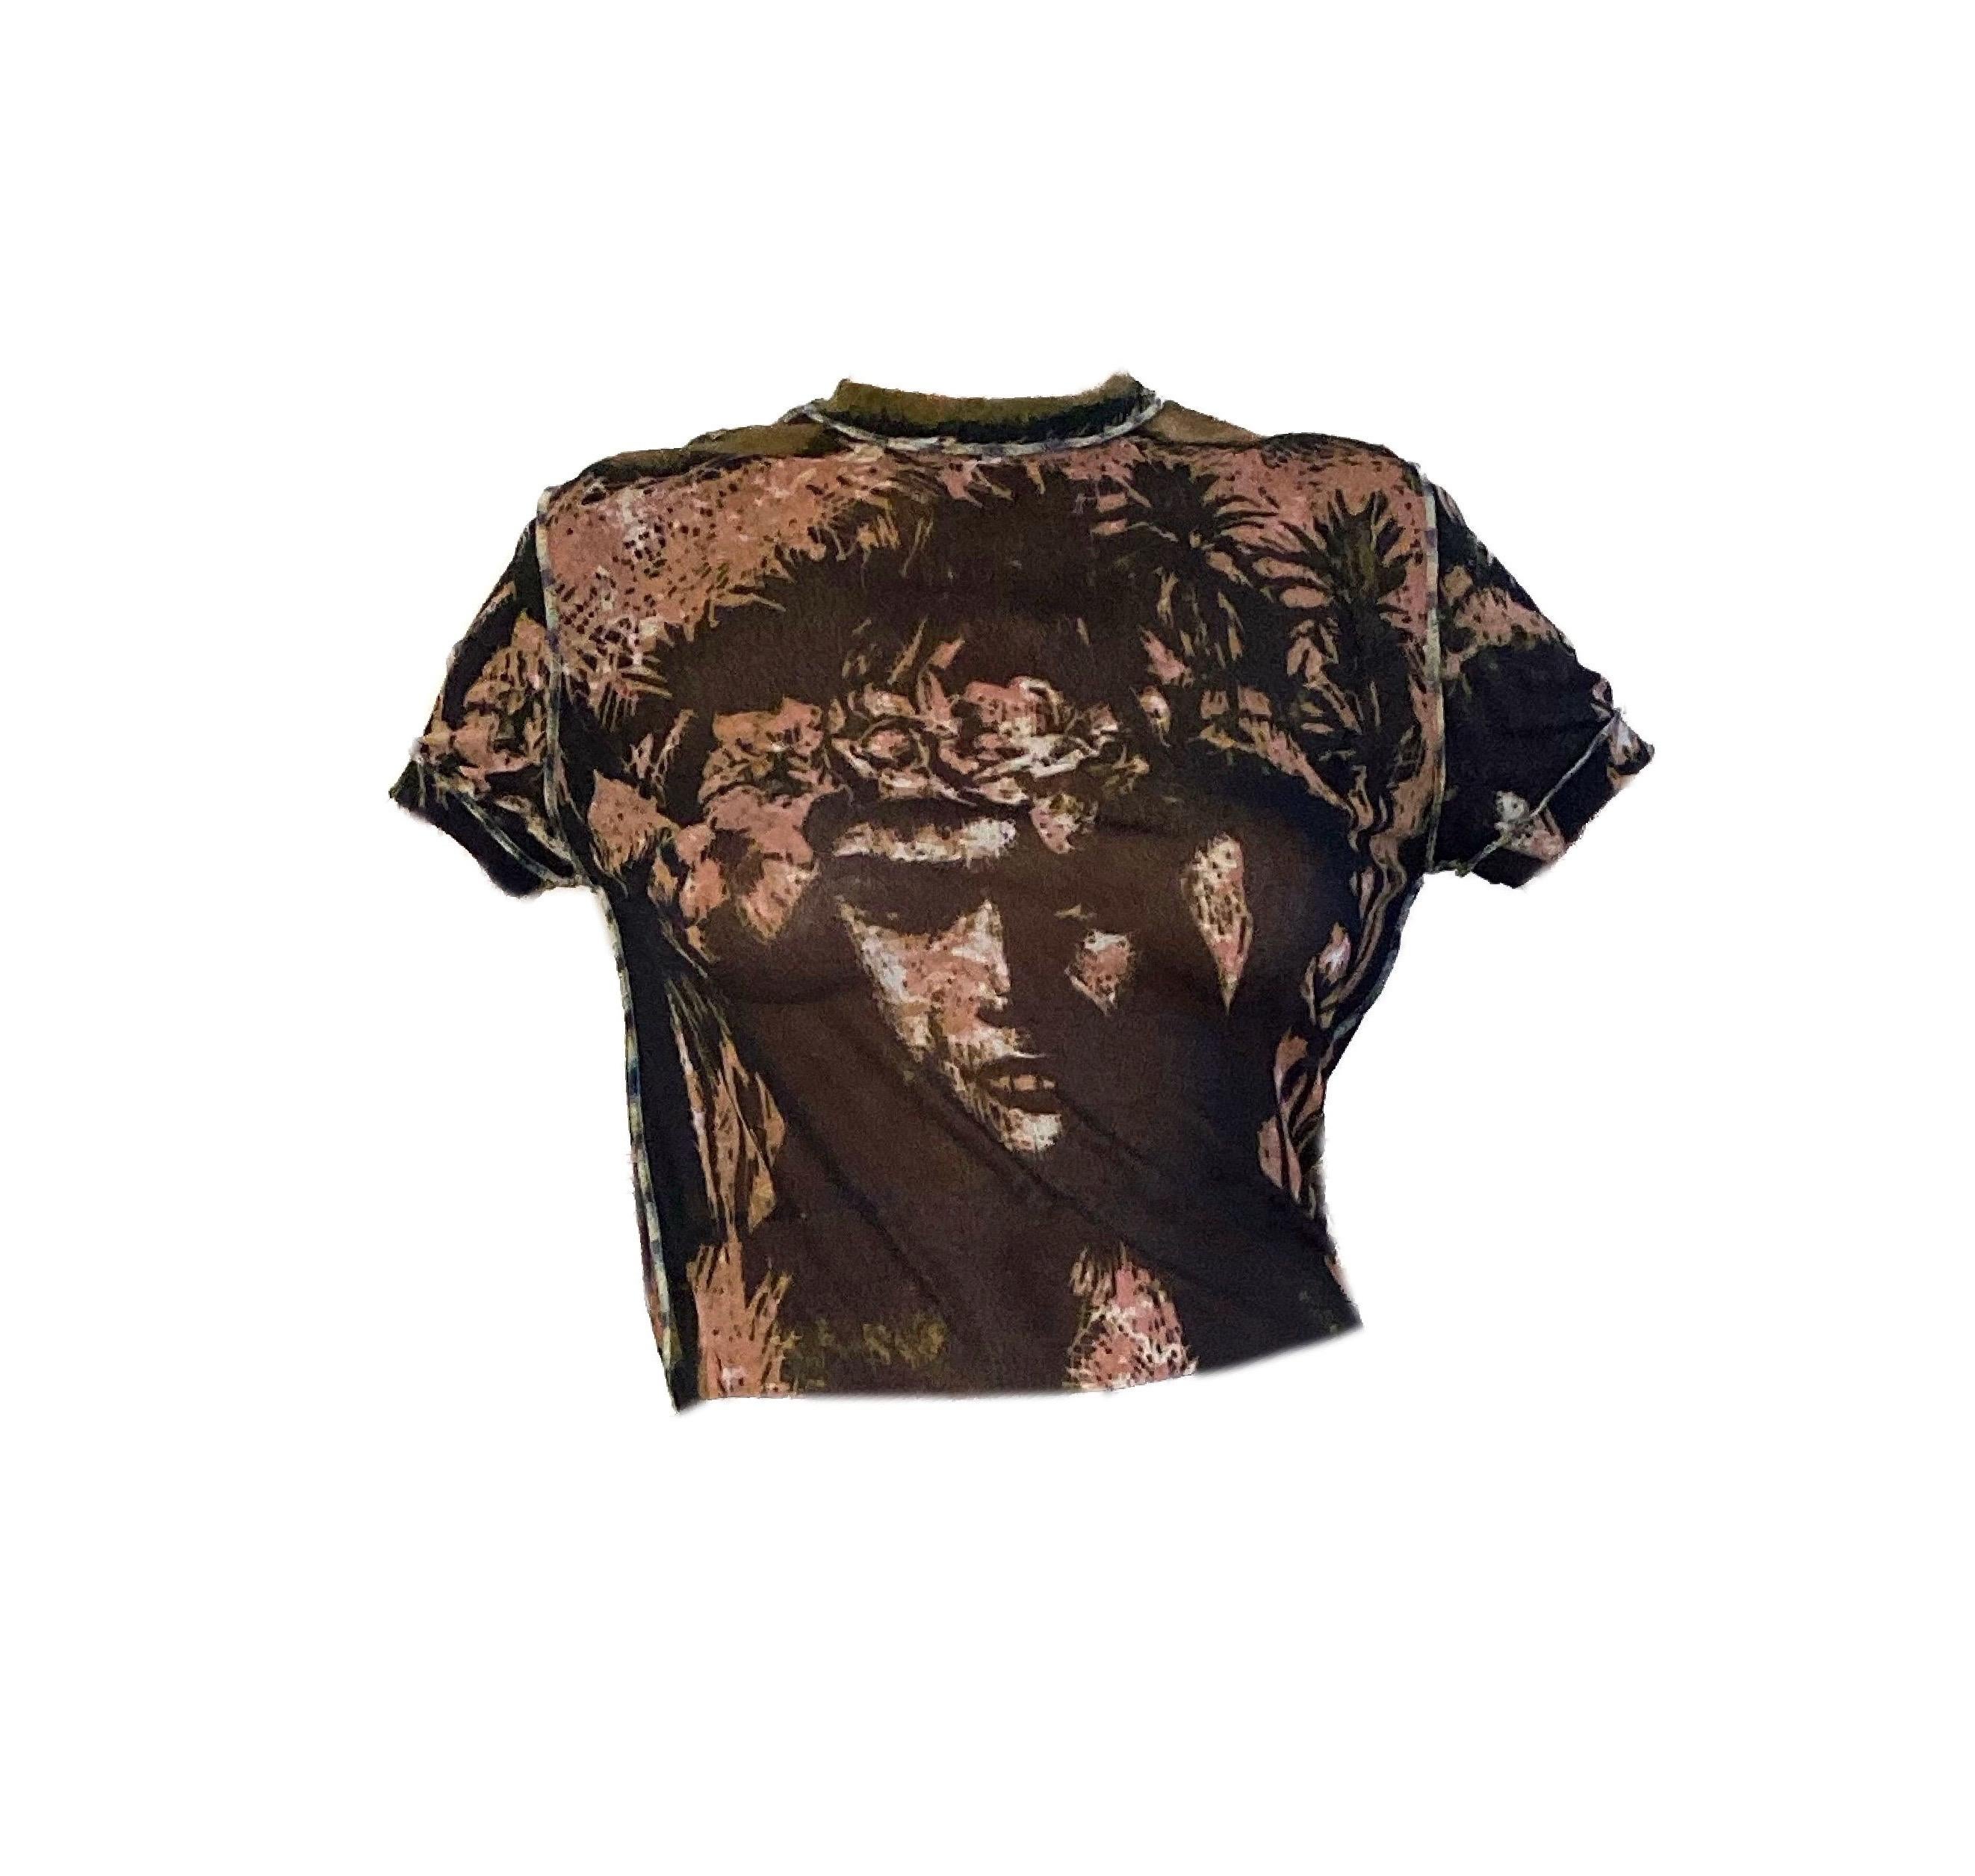 Black Jean Paul Gaultier S/S 2000 Polynesian print Mesh T-Shirt